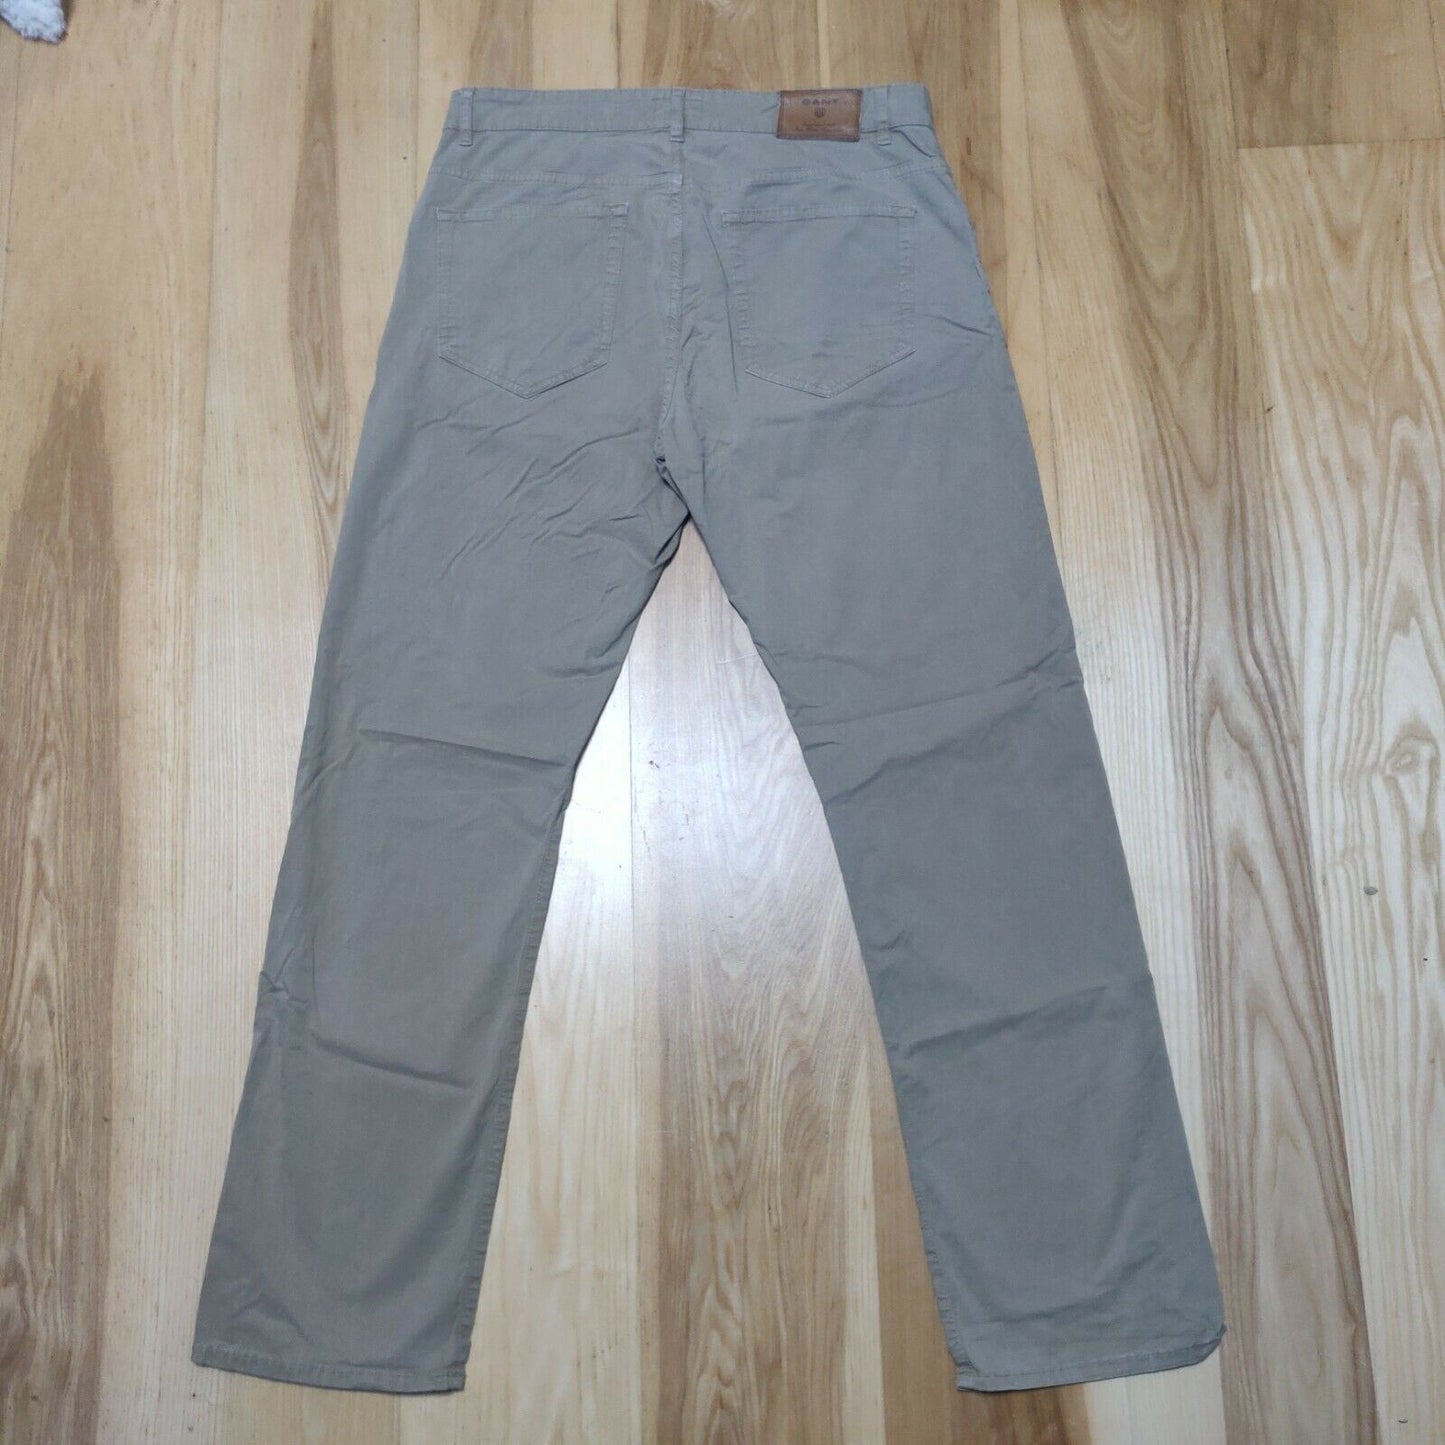 Gant Beige Chinos Trousers Regular Fit Men Size 34W/32L